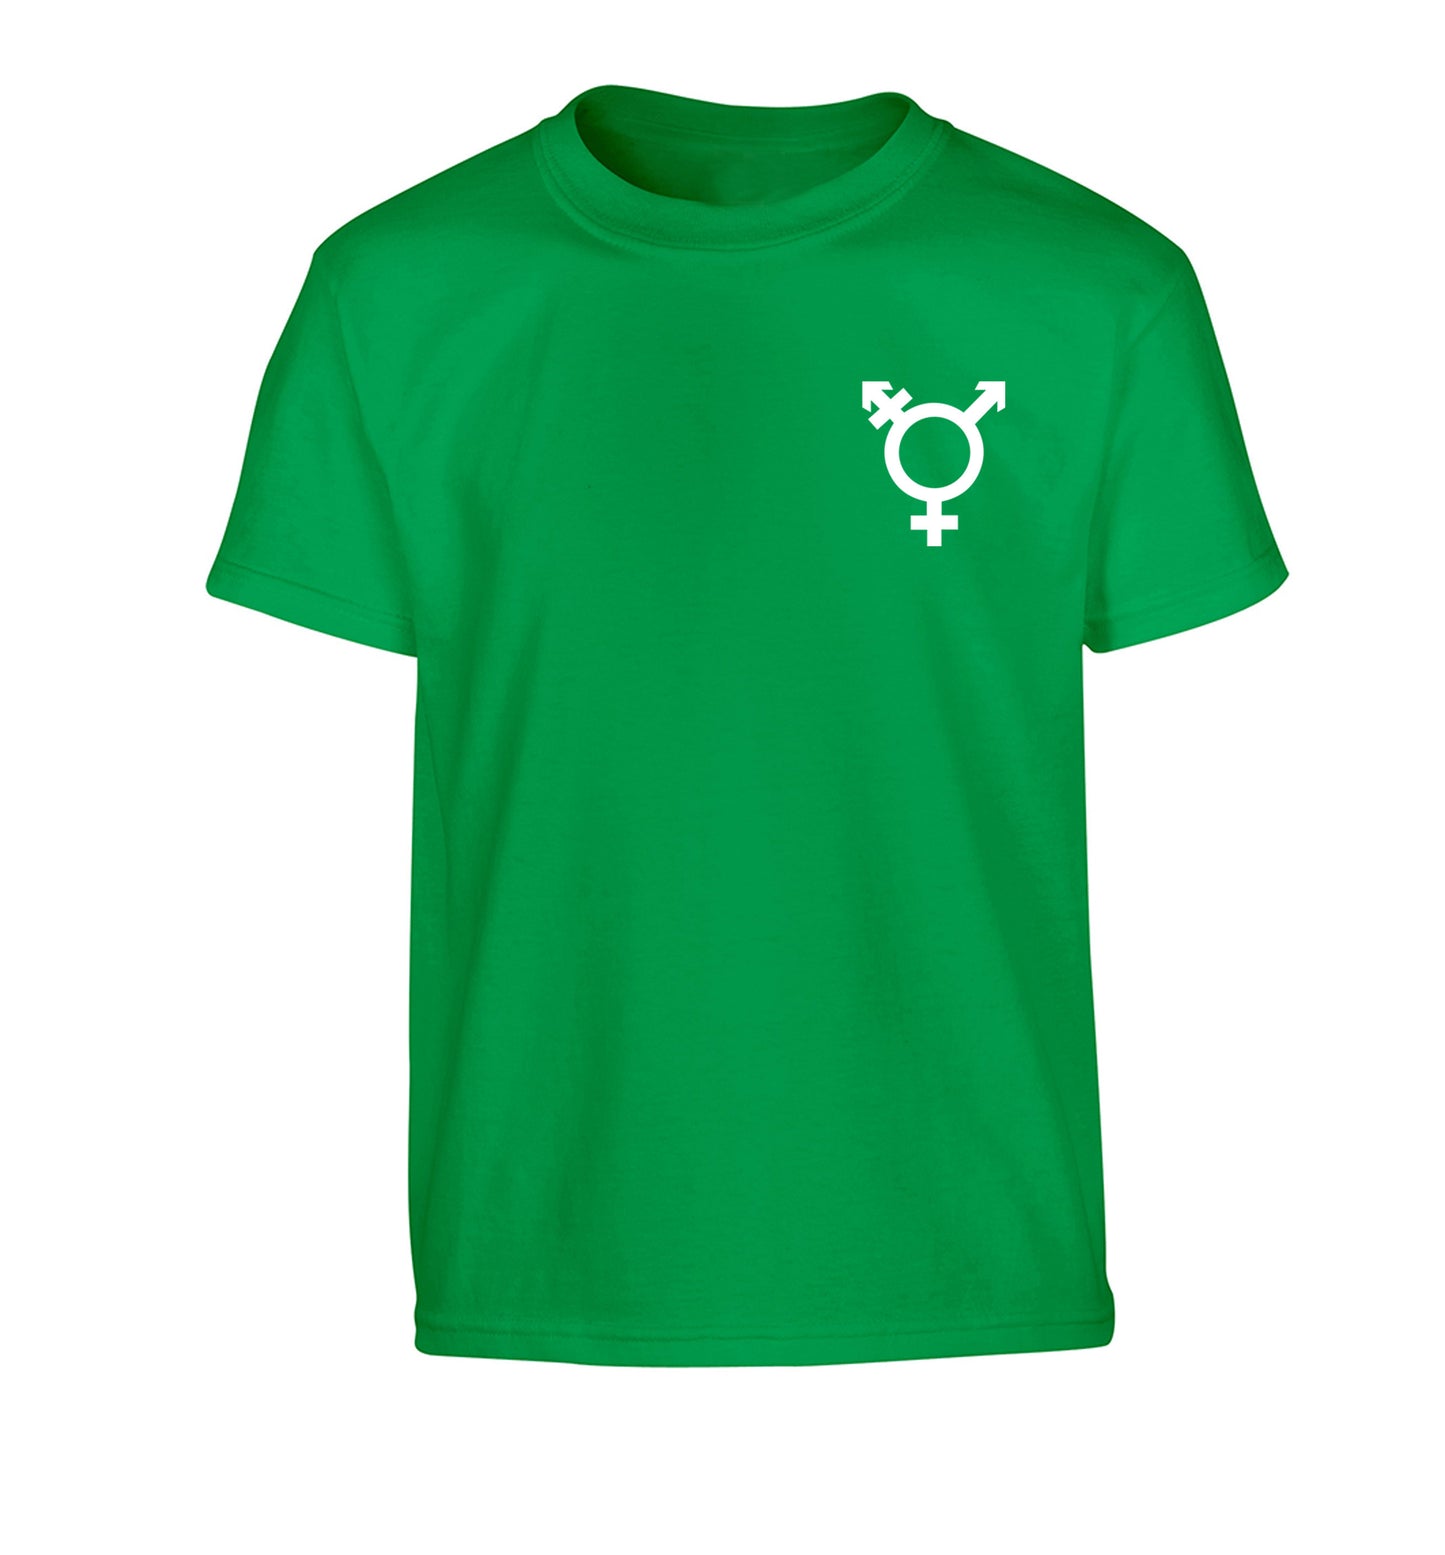 Trans gender symbol pocket Children's green Tshirt 12-14 Years